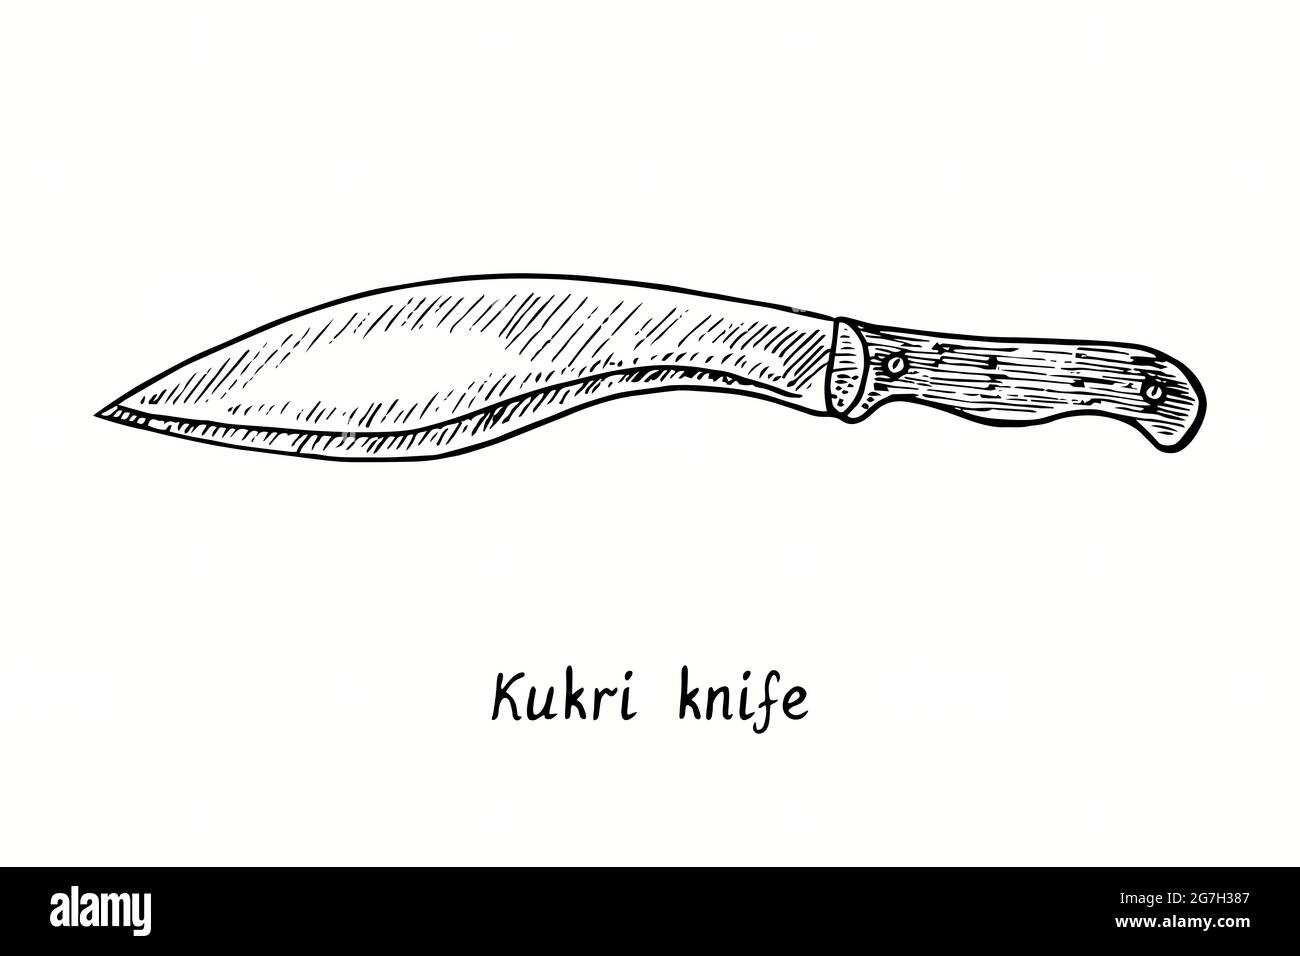 Kukri knife type. Ink black and white drawing outline illustration Stock Photo